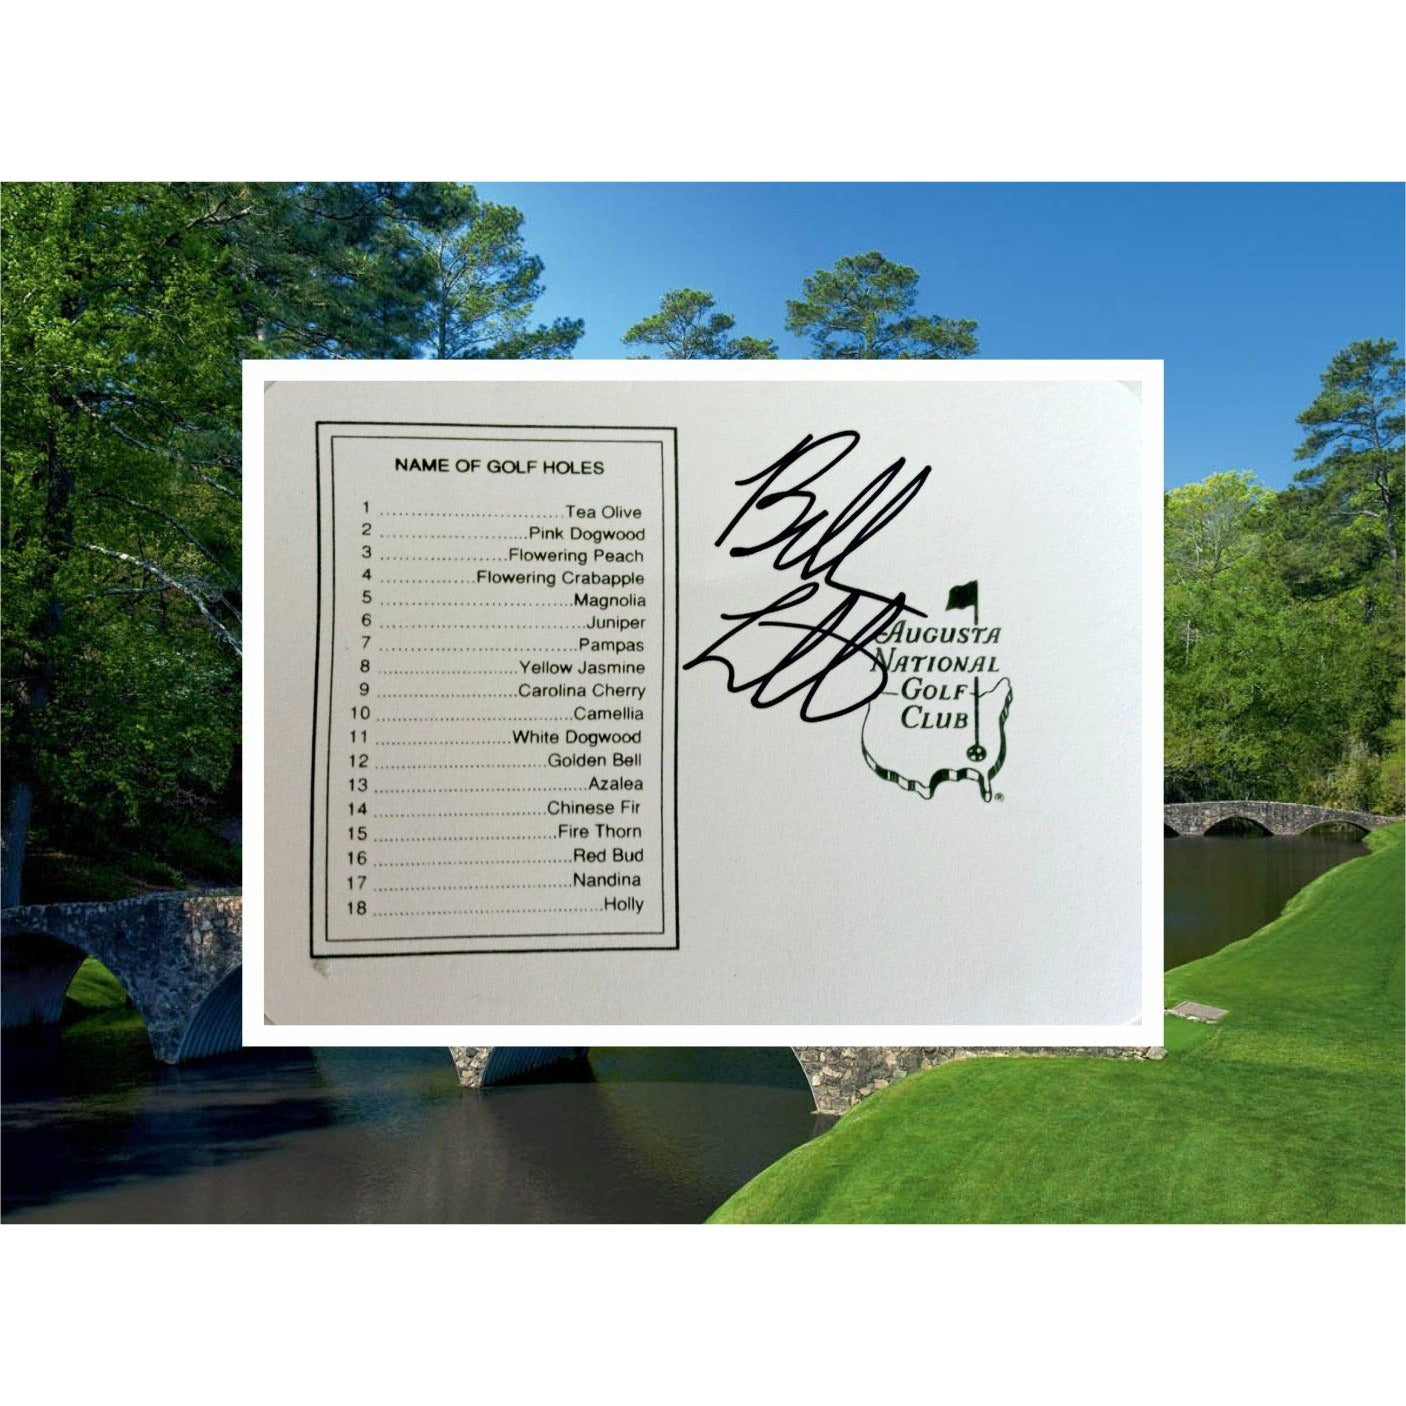 Bubba Watson Masters Golf scorecard signed with proof